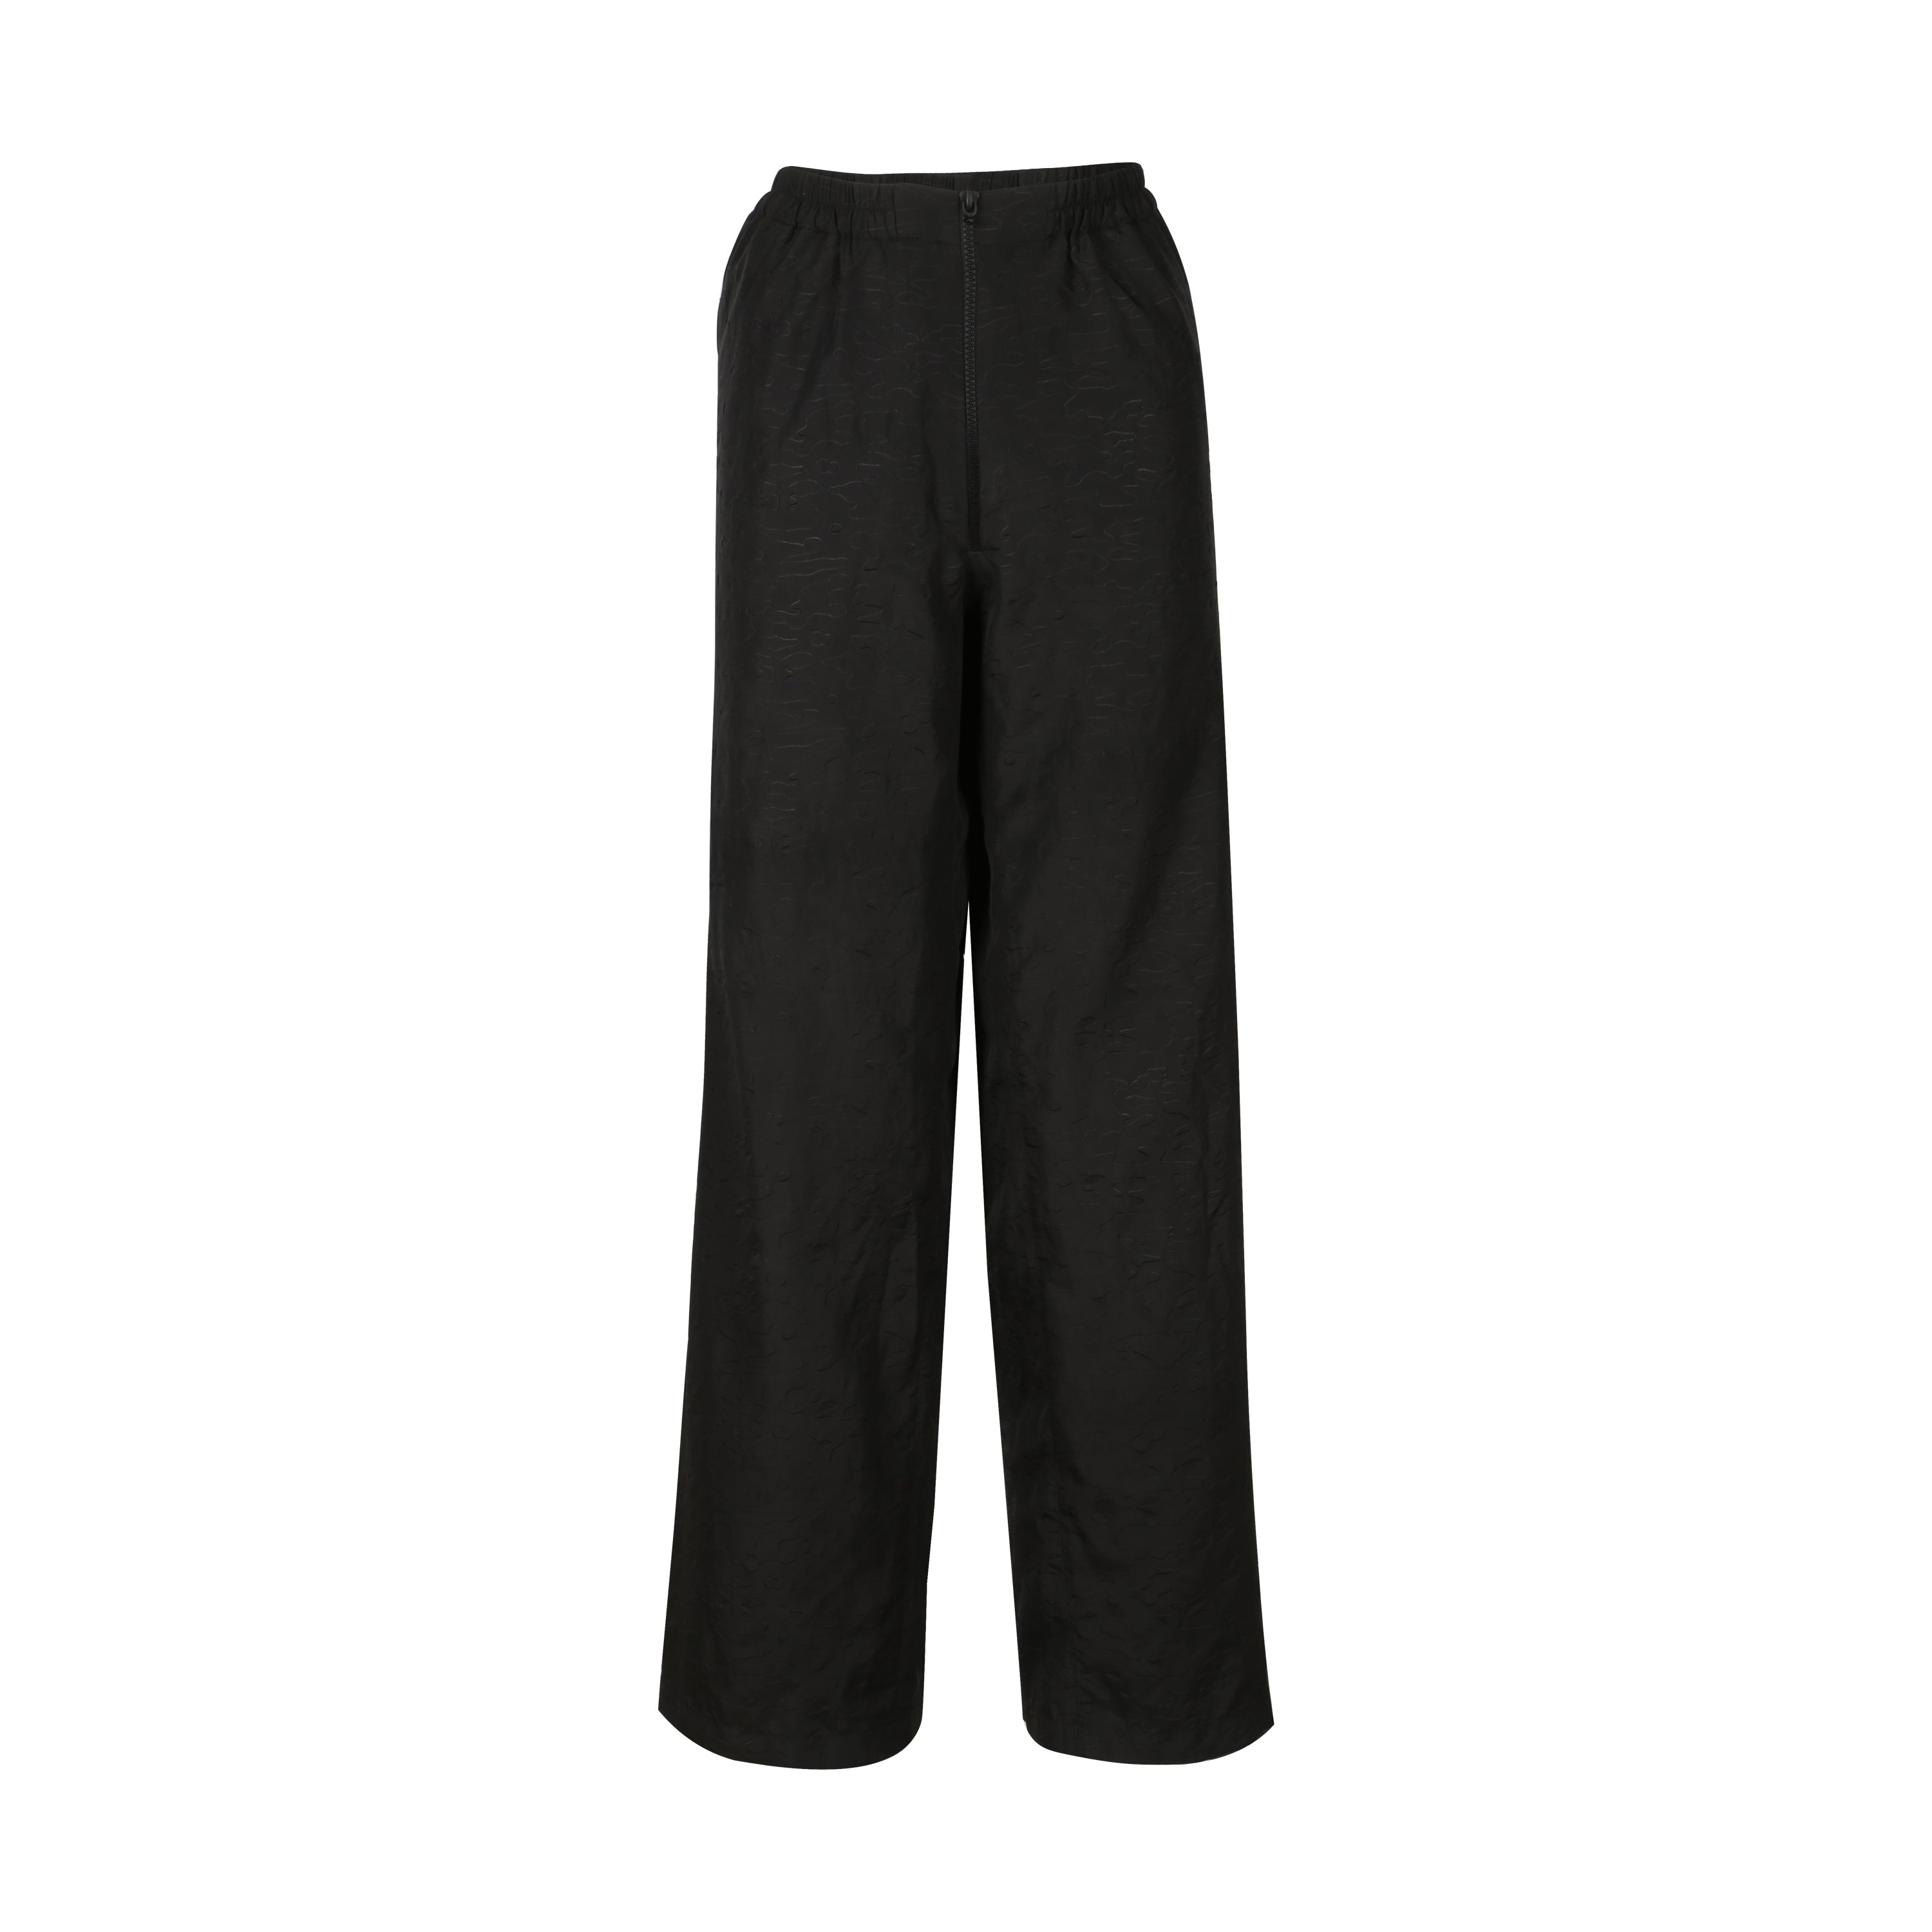 Black embossed pants & shirt co-ord set